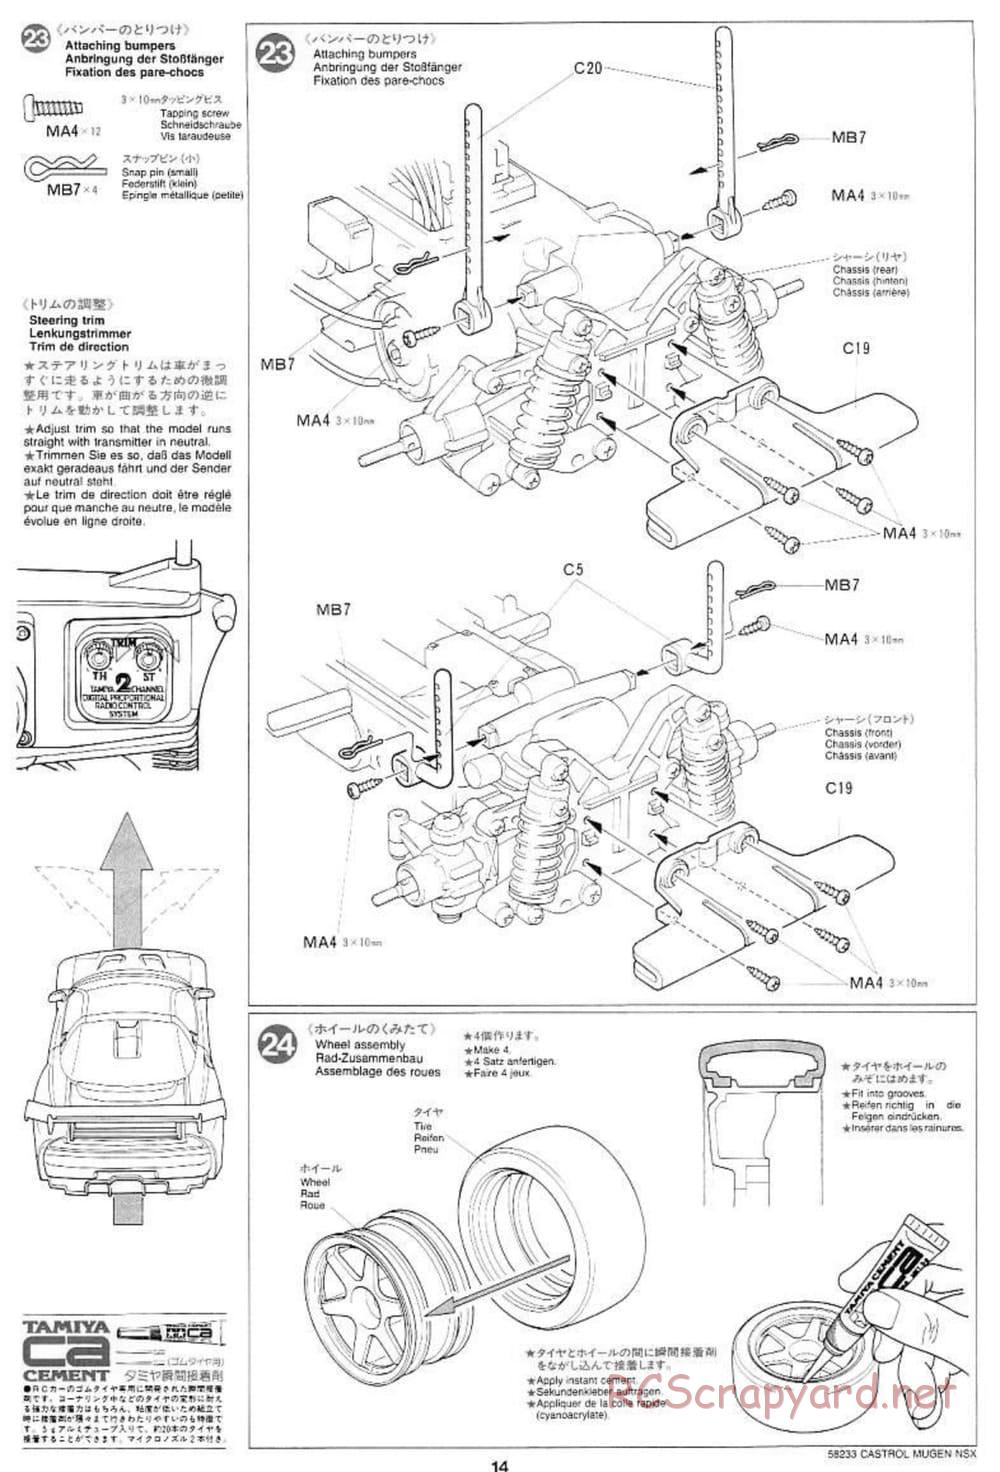 Tamiya - Castrol Mugen NSX - TL-01 Chassis - Manual - Page 14